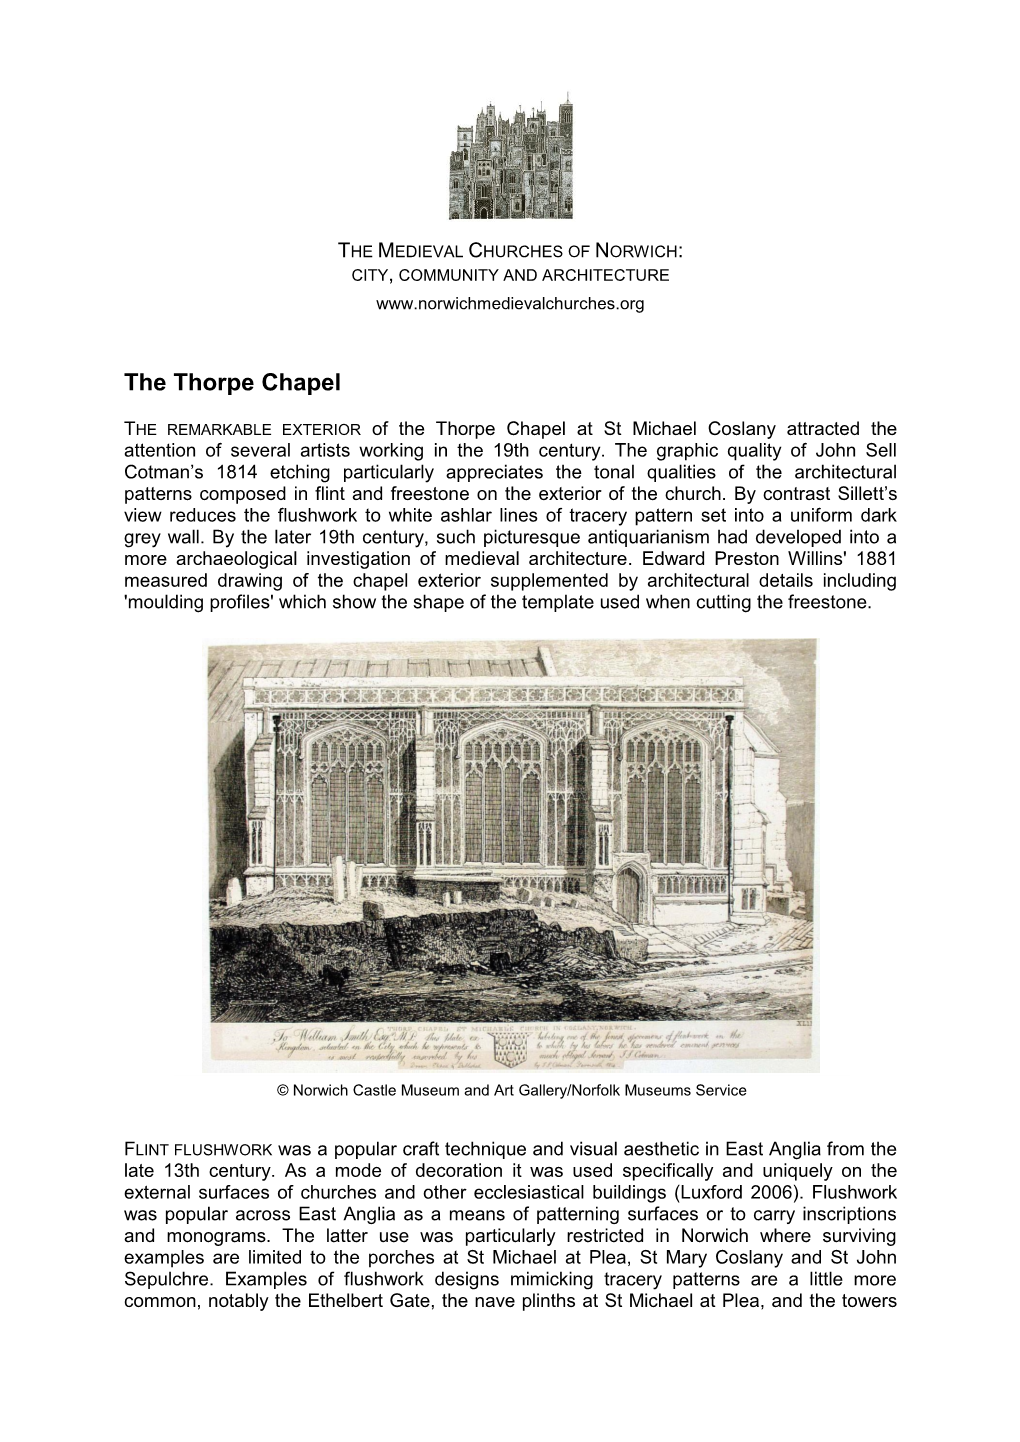 The Thorpe Chapel